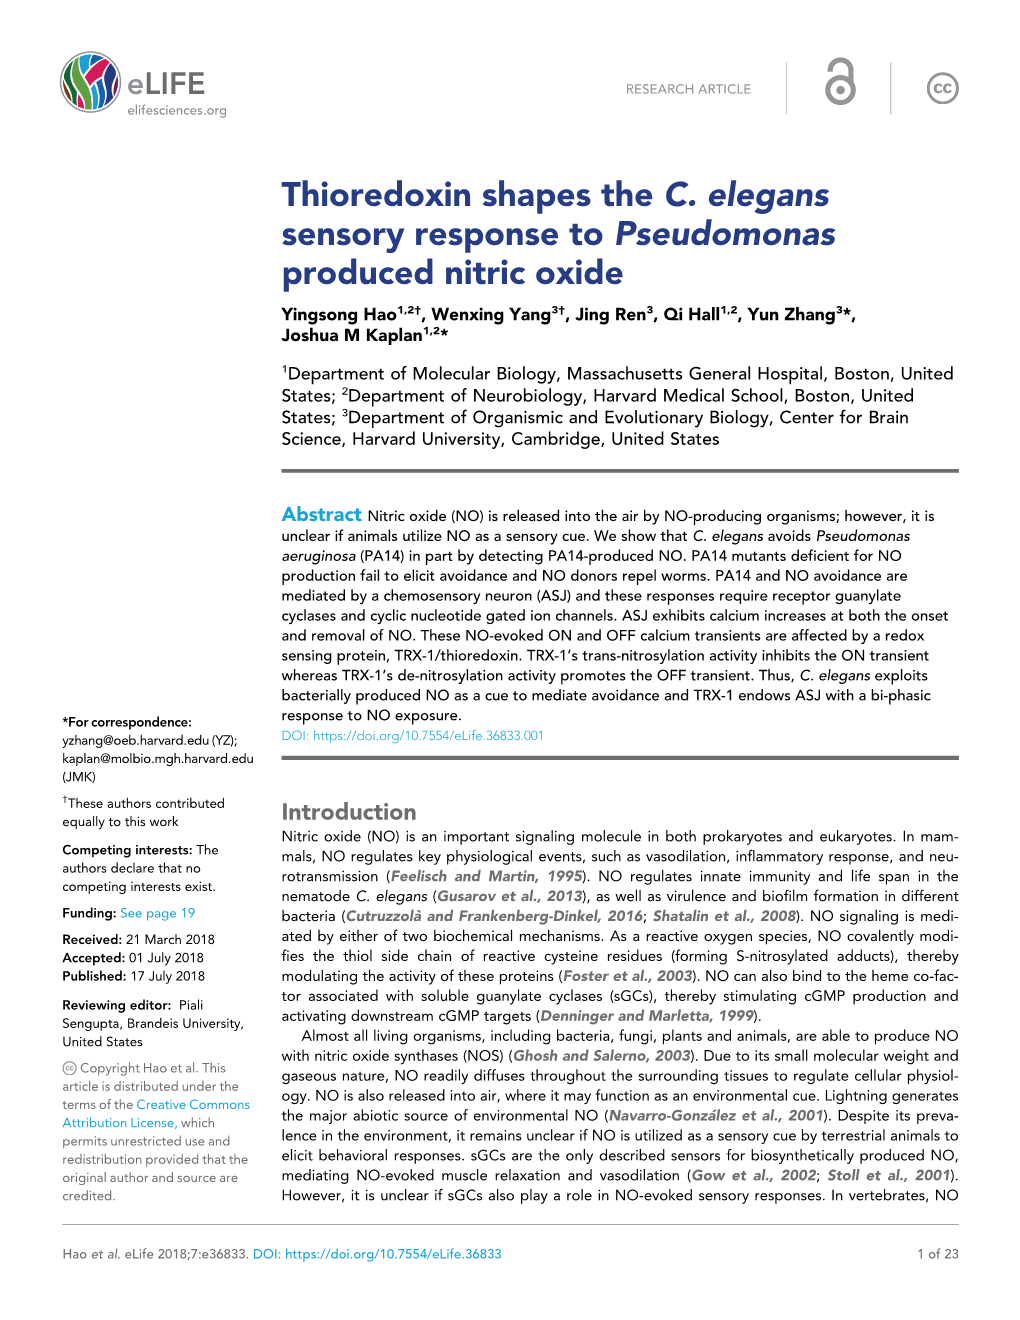 Thioredoxin Shapes the C. Elegans Sensory Response to Pseudomonas Produced Nitric Oxide